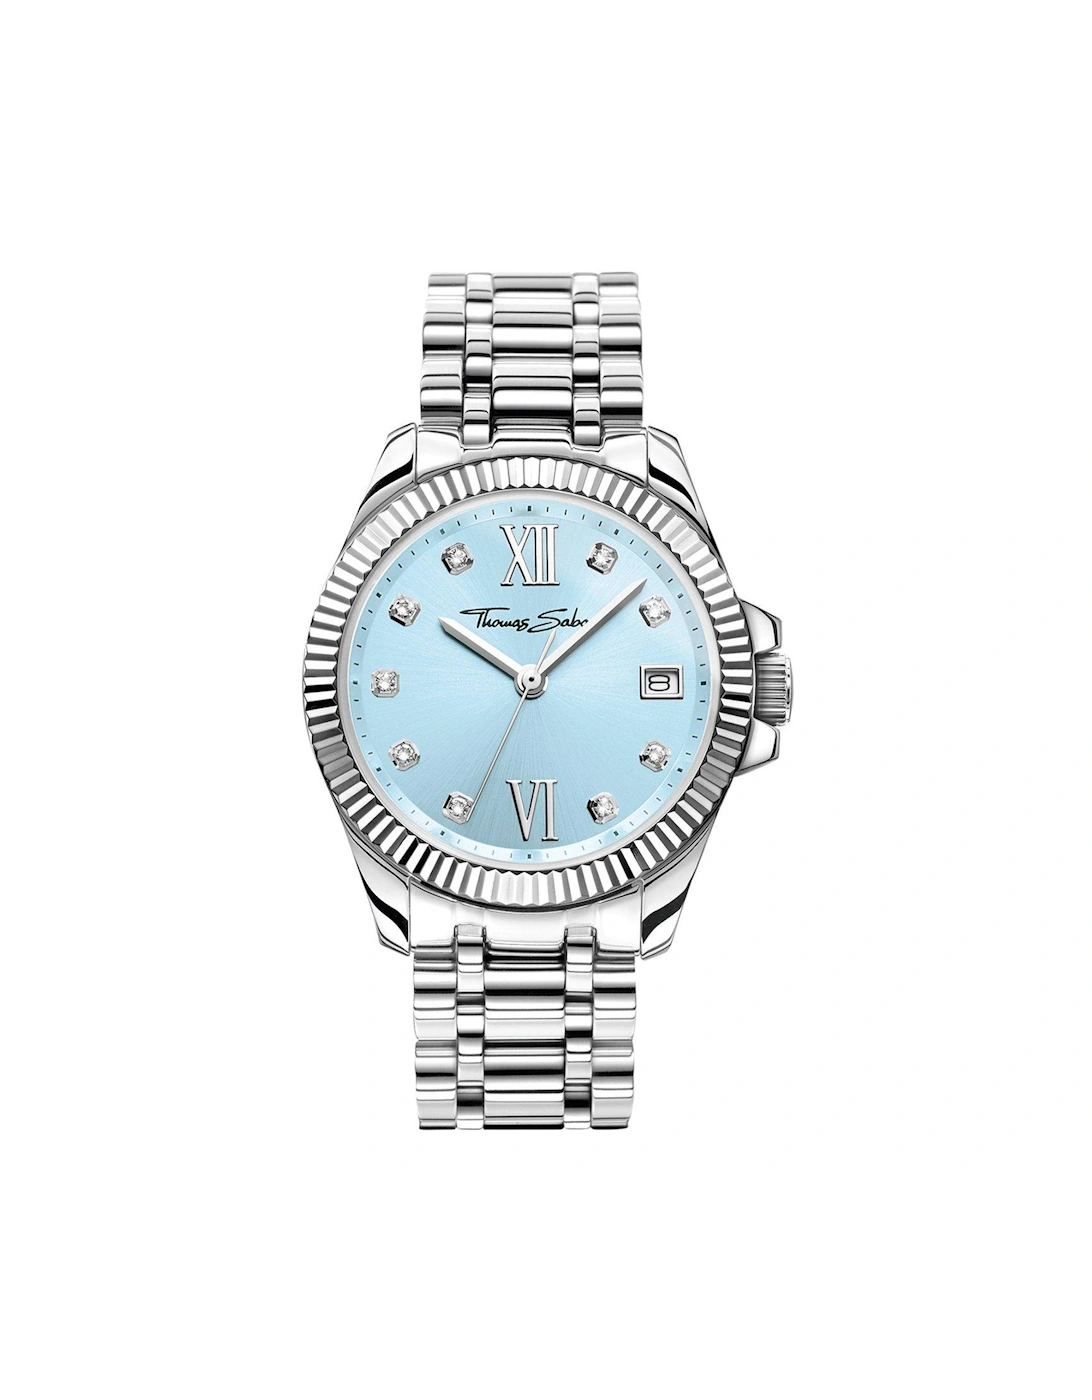 Women's Watch: Elegant light blue dial, white zirconia indexes, Roman numerals, fluted bezel, TS logo crown. Adjustable, 2 of 1